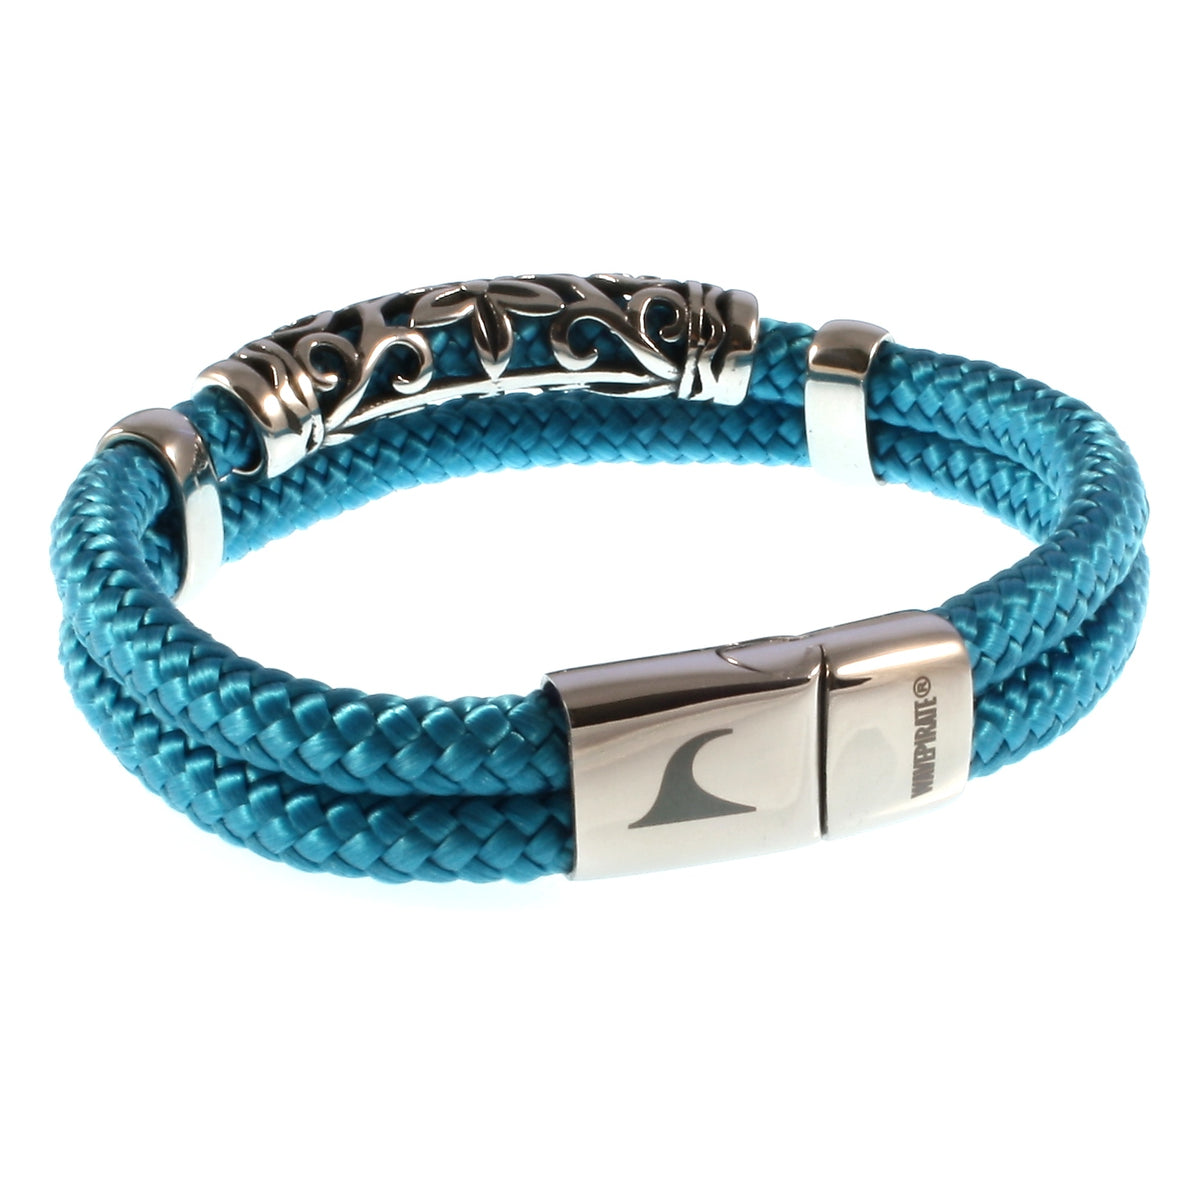 Herren-Segeltau-Armband-xo-blau-geflochten-Edelstahlverschluss-hinten-wavepirate-shop-st